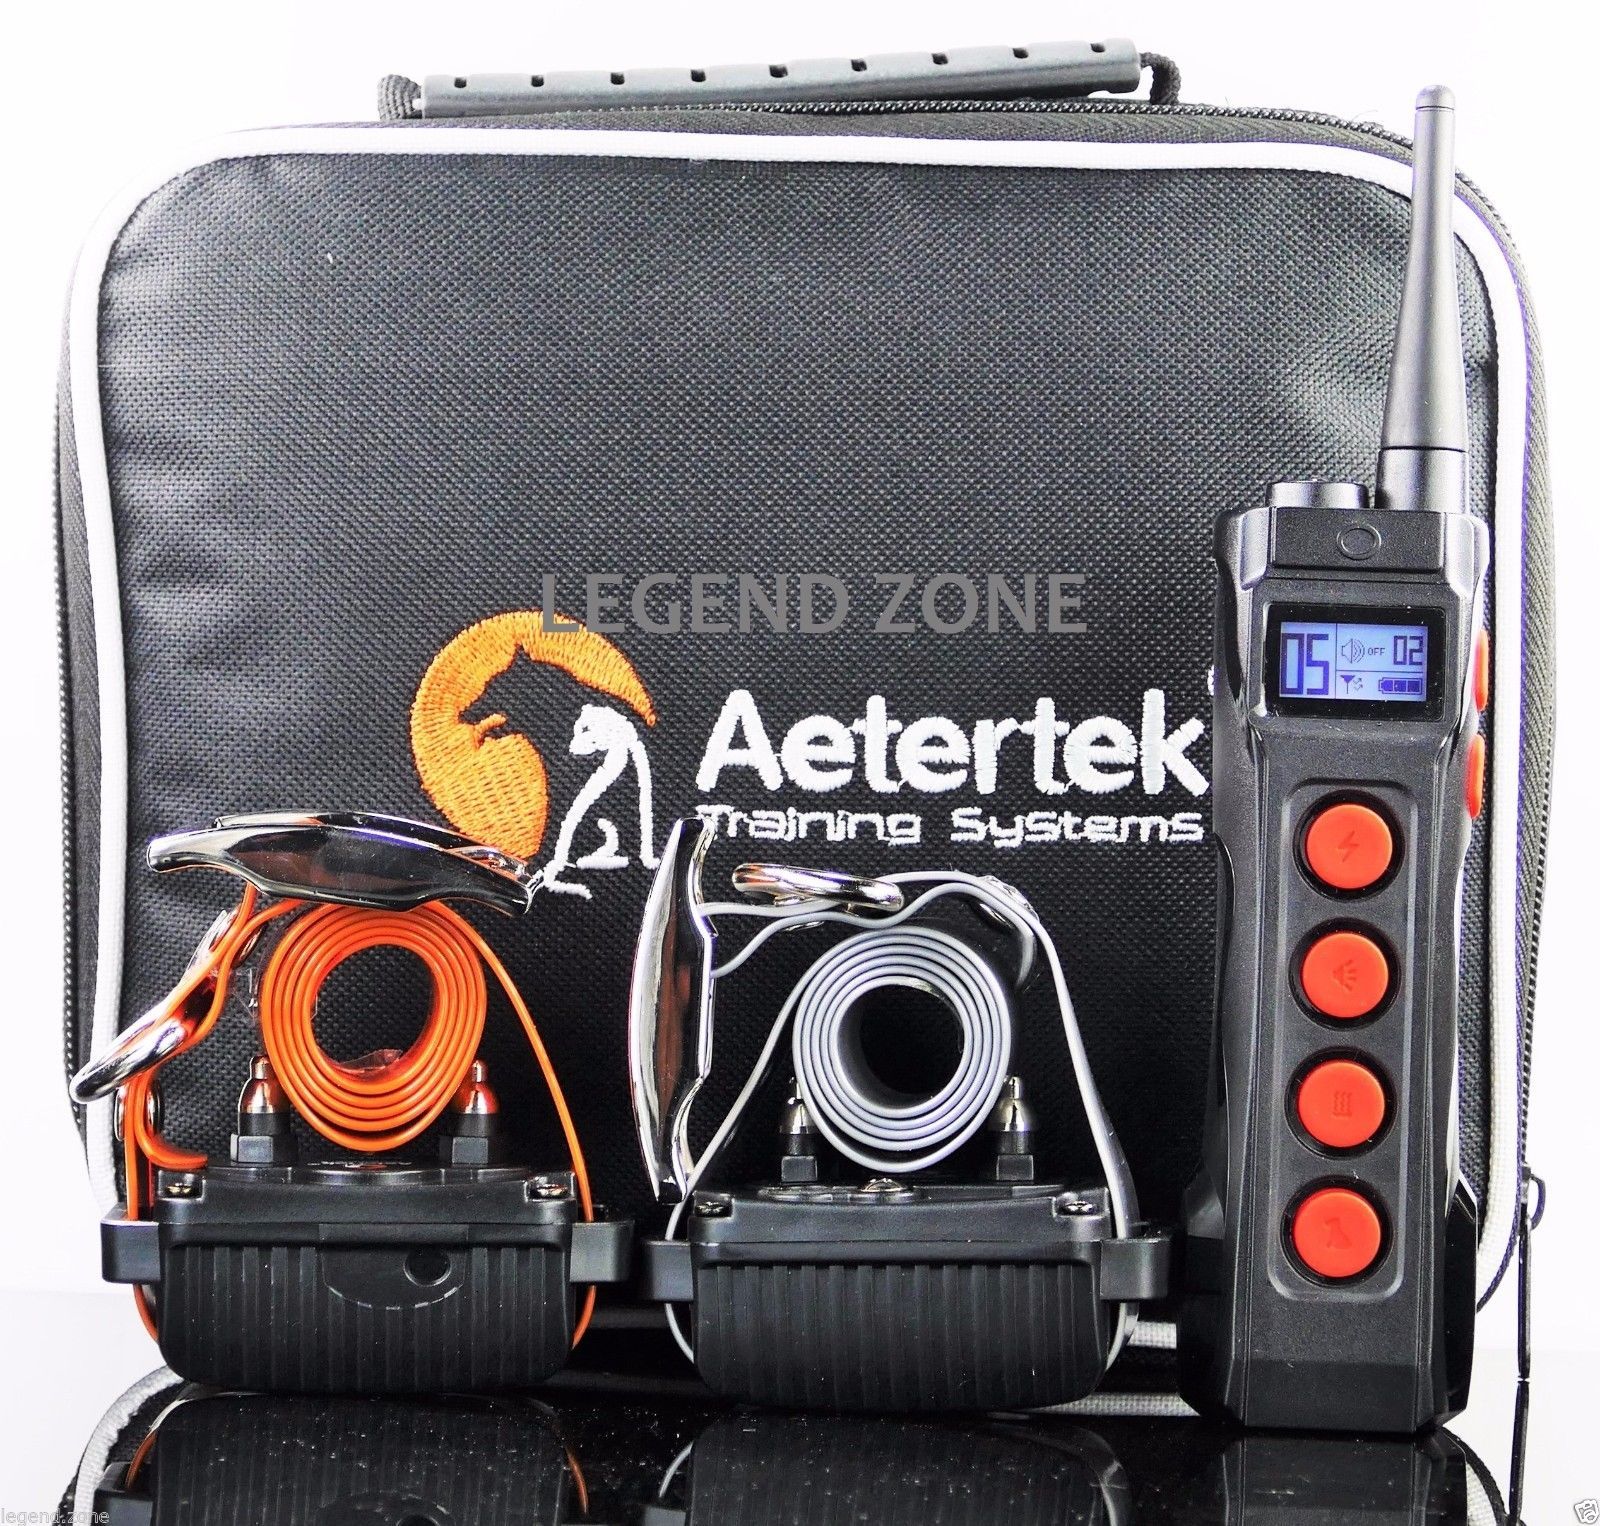 Aetertek 1000M Remote Dog Trainer Waterproof Shock Hunting Collar Auto Anti bark